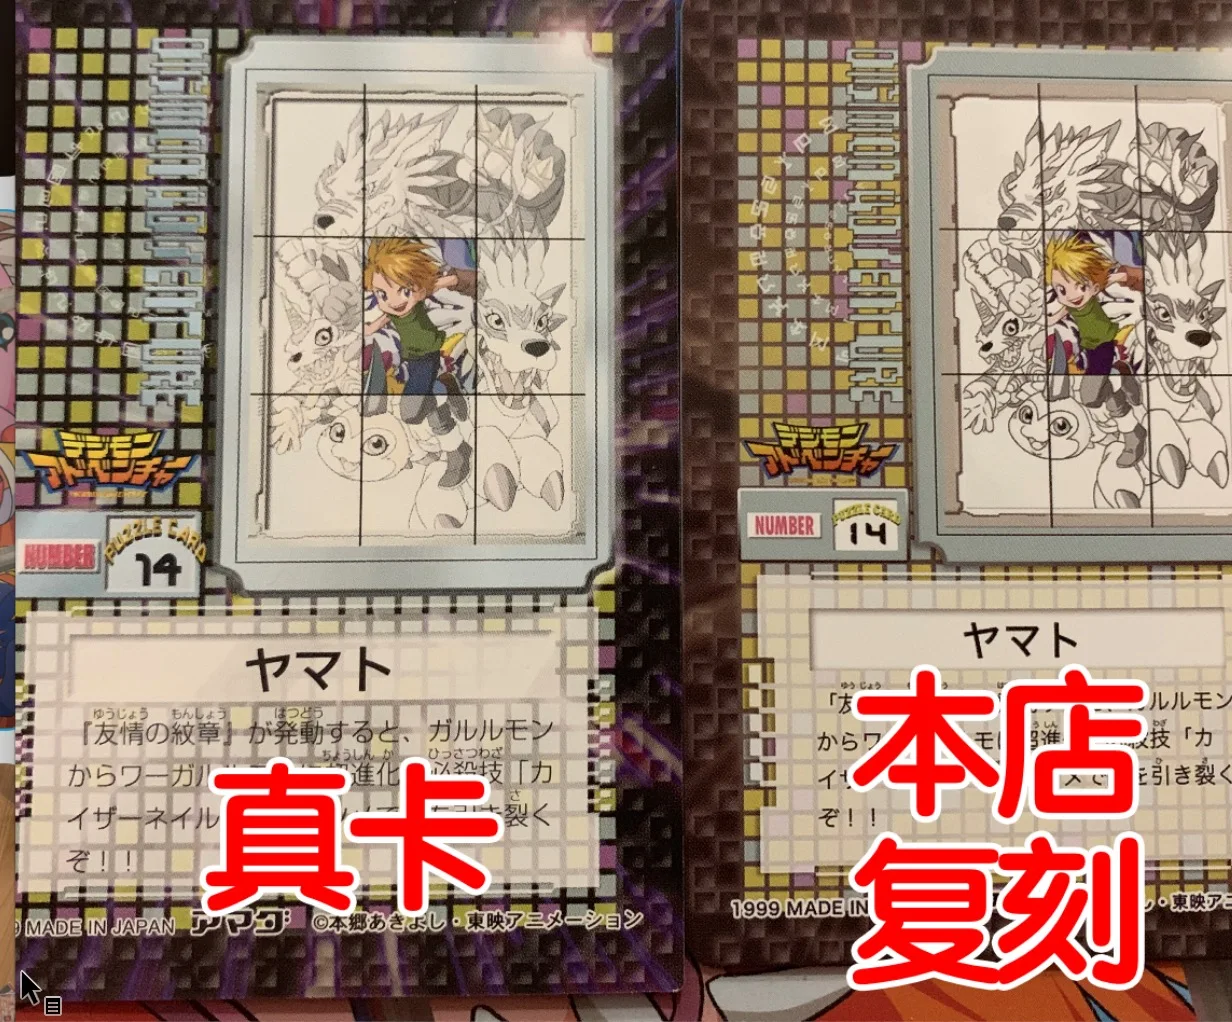 10 шт./компл. Reissue Digimon monster 9 в 1 Игрушки Хобби Коллекционные игрушки коллекция аниме-открытки